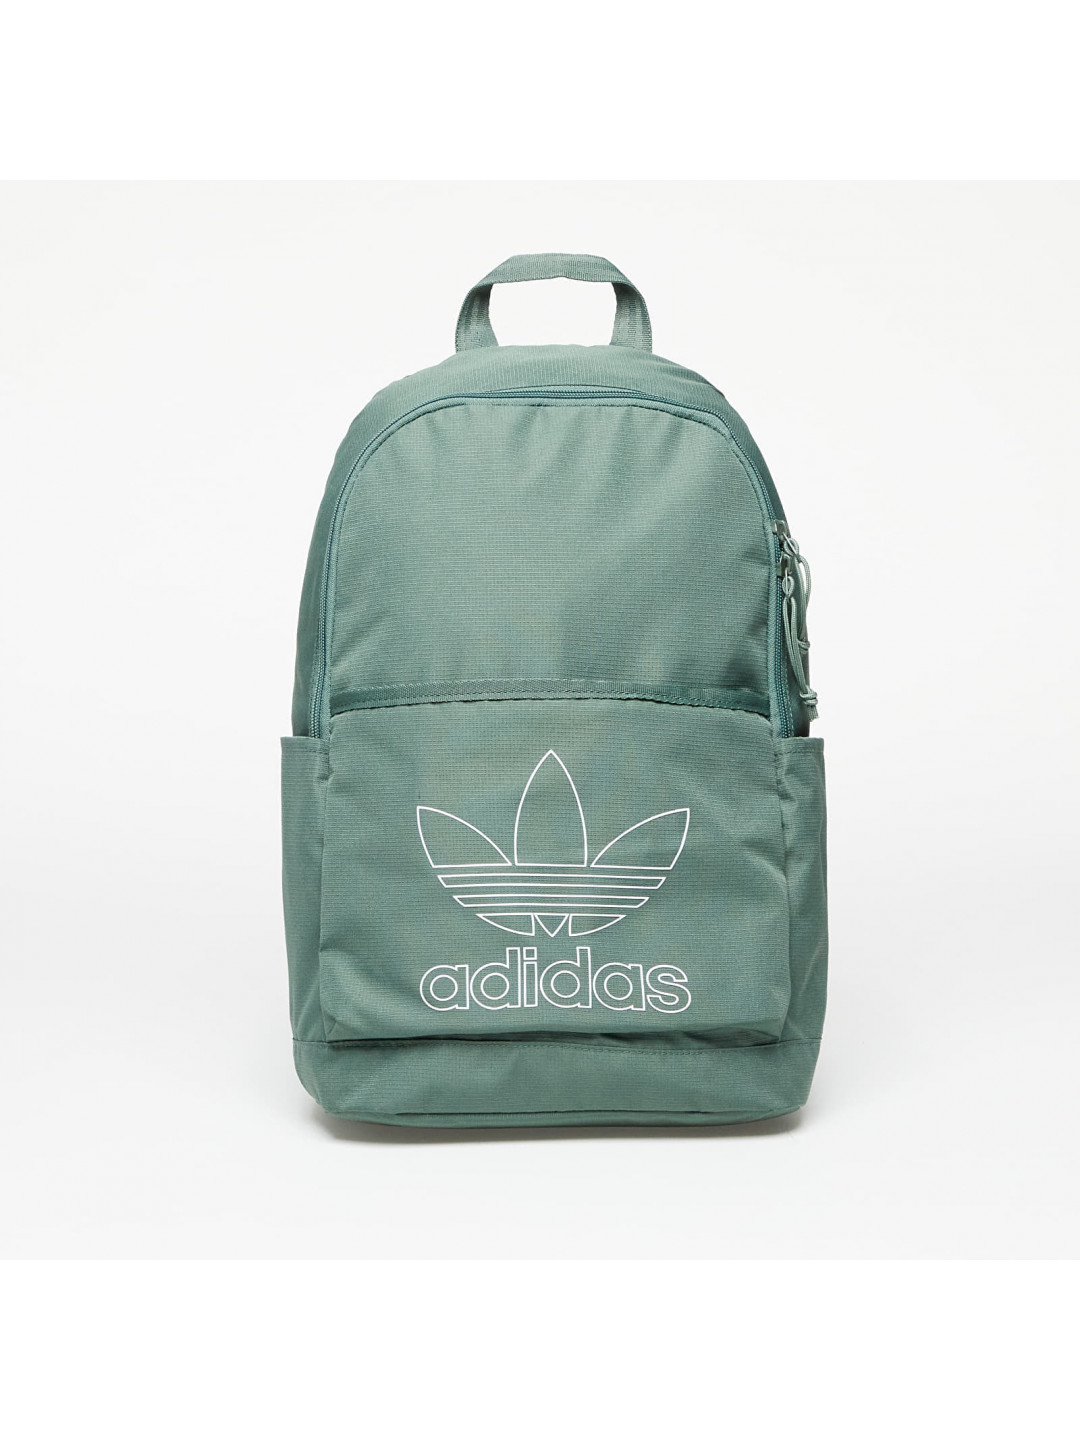 Adidas Adicolor Backpack Green Oxide